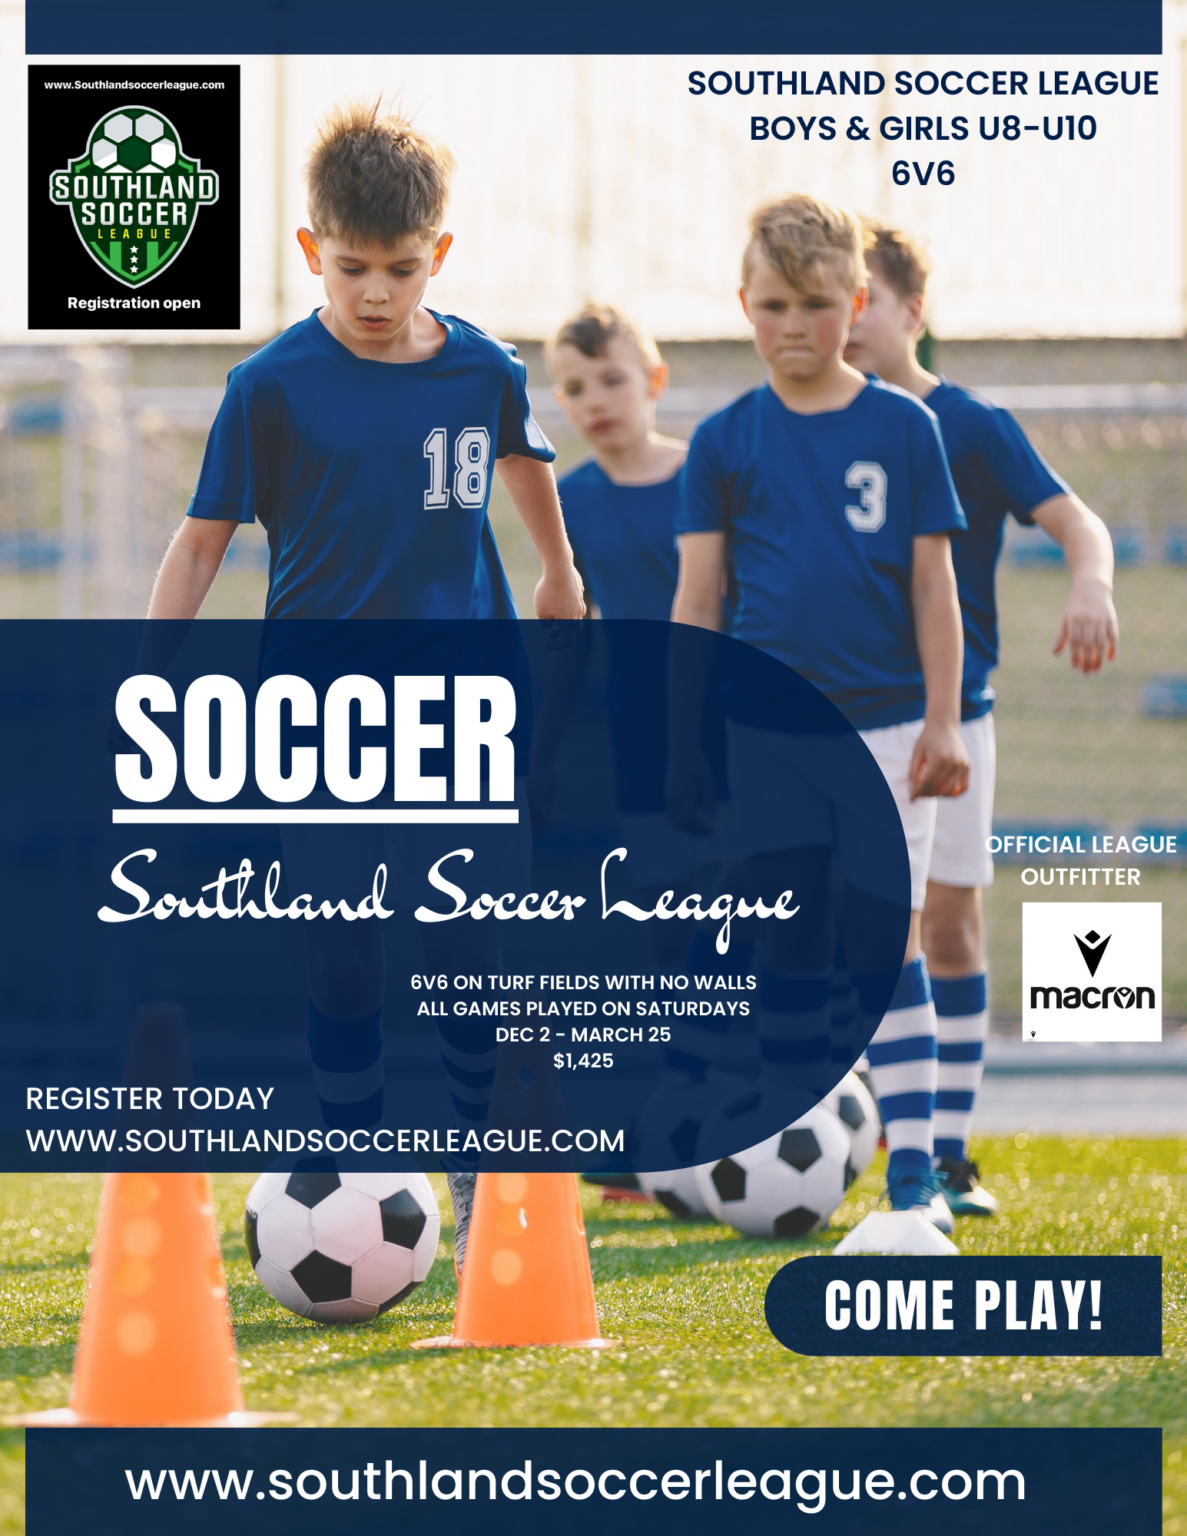 Southland Soccer League Boys & Girls U8-U10 6v6